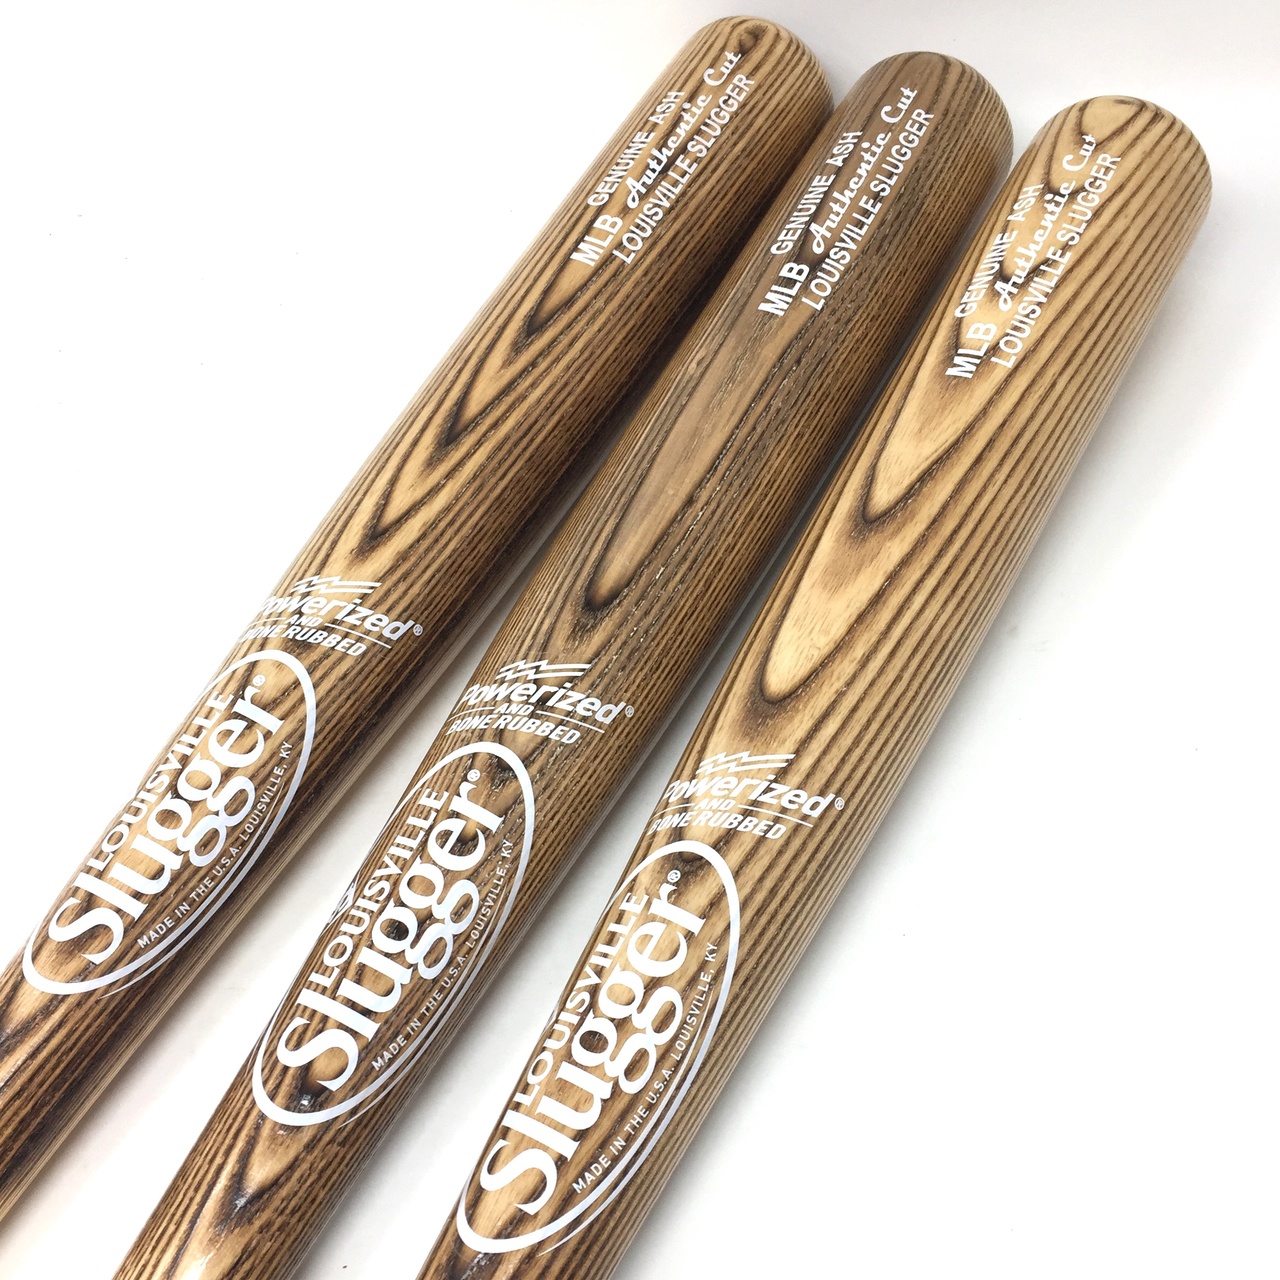 louisville-slugger-baseball-wood-bat-pack-34-inch-3-bats-mlb-ash BATPACK-0012 Louisville Does not apply 34 inch wood baseball bats by Louisville Slugger. MLB Authentic Cut